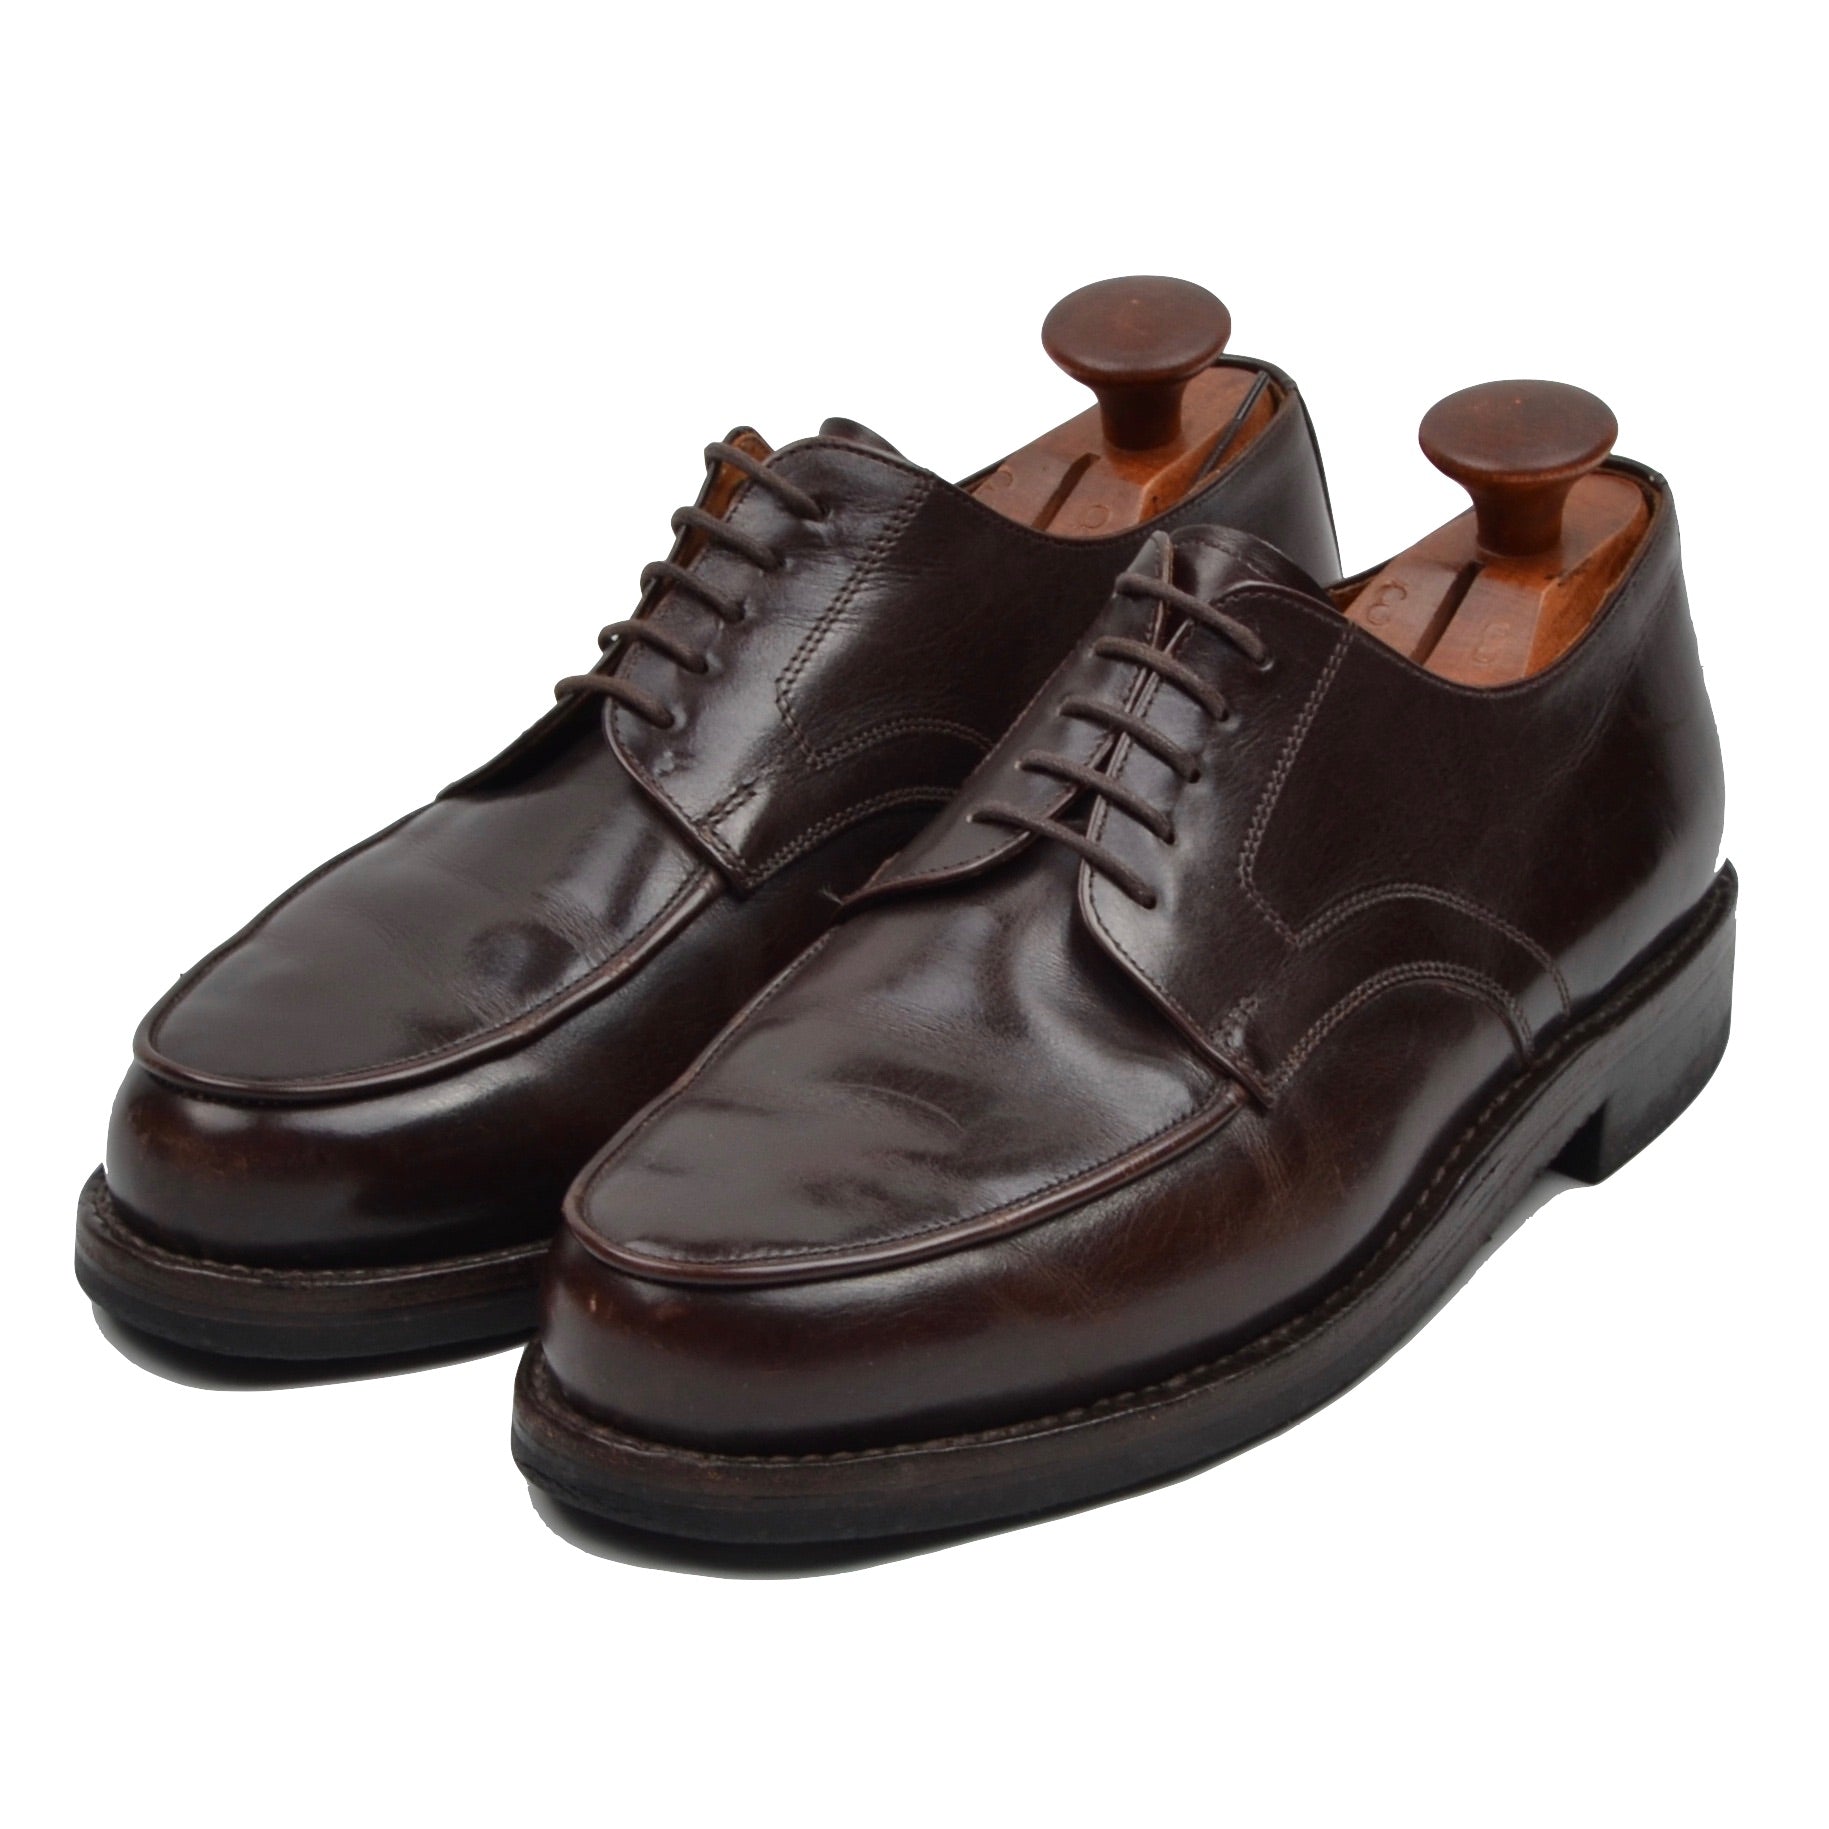 Ludwig Reiter Golfer Shoes Size 8 - Brown – Leot James